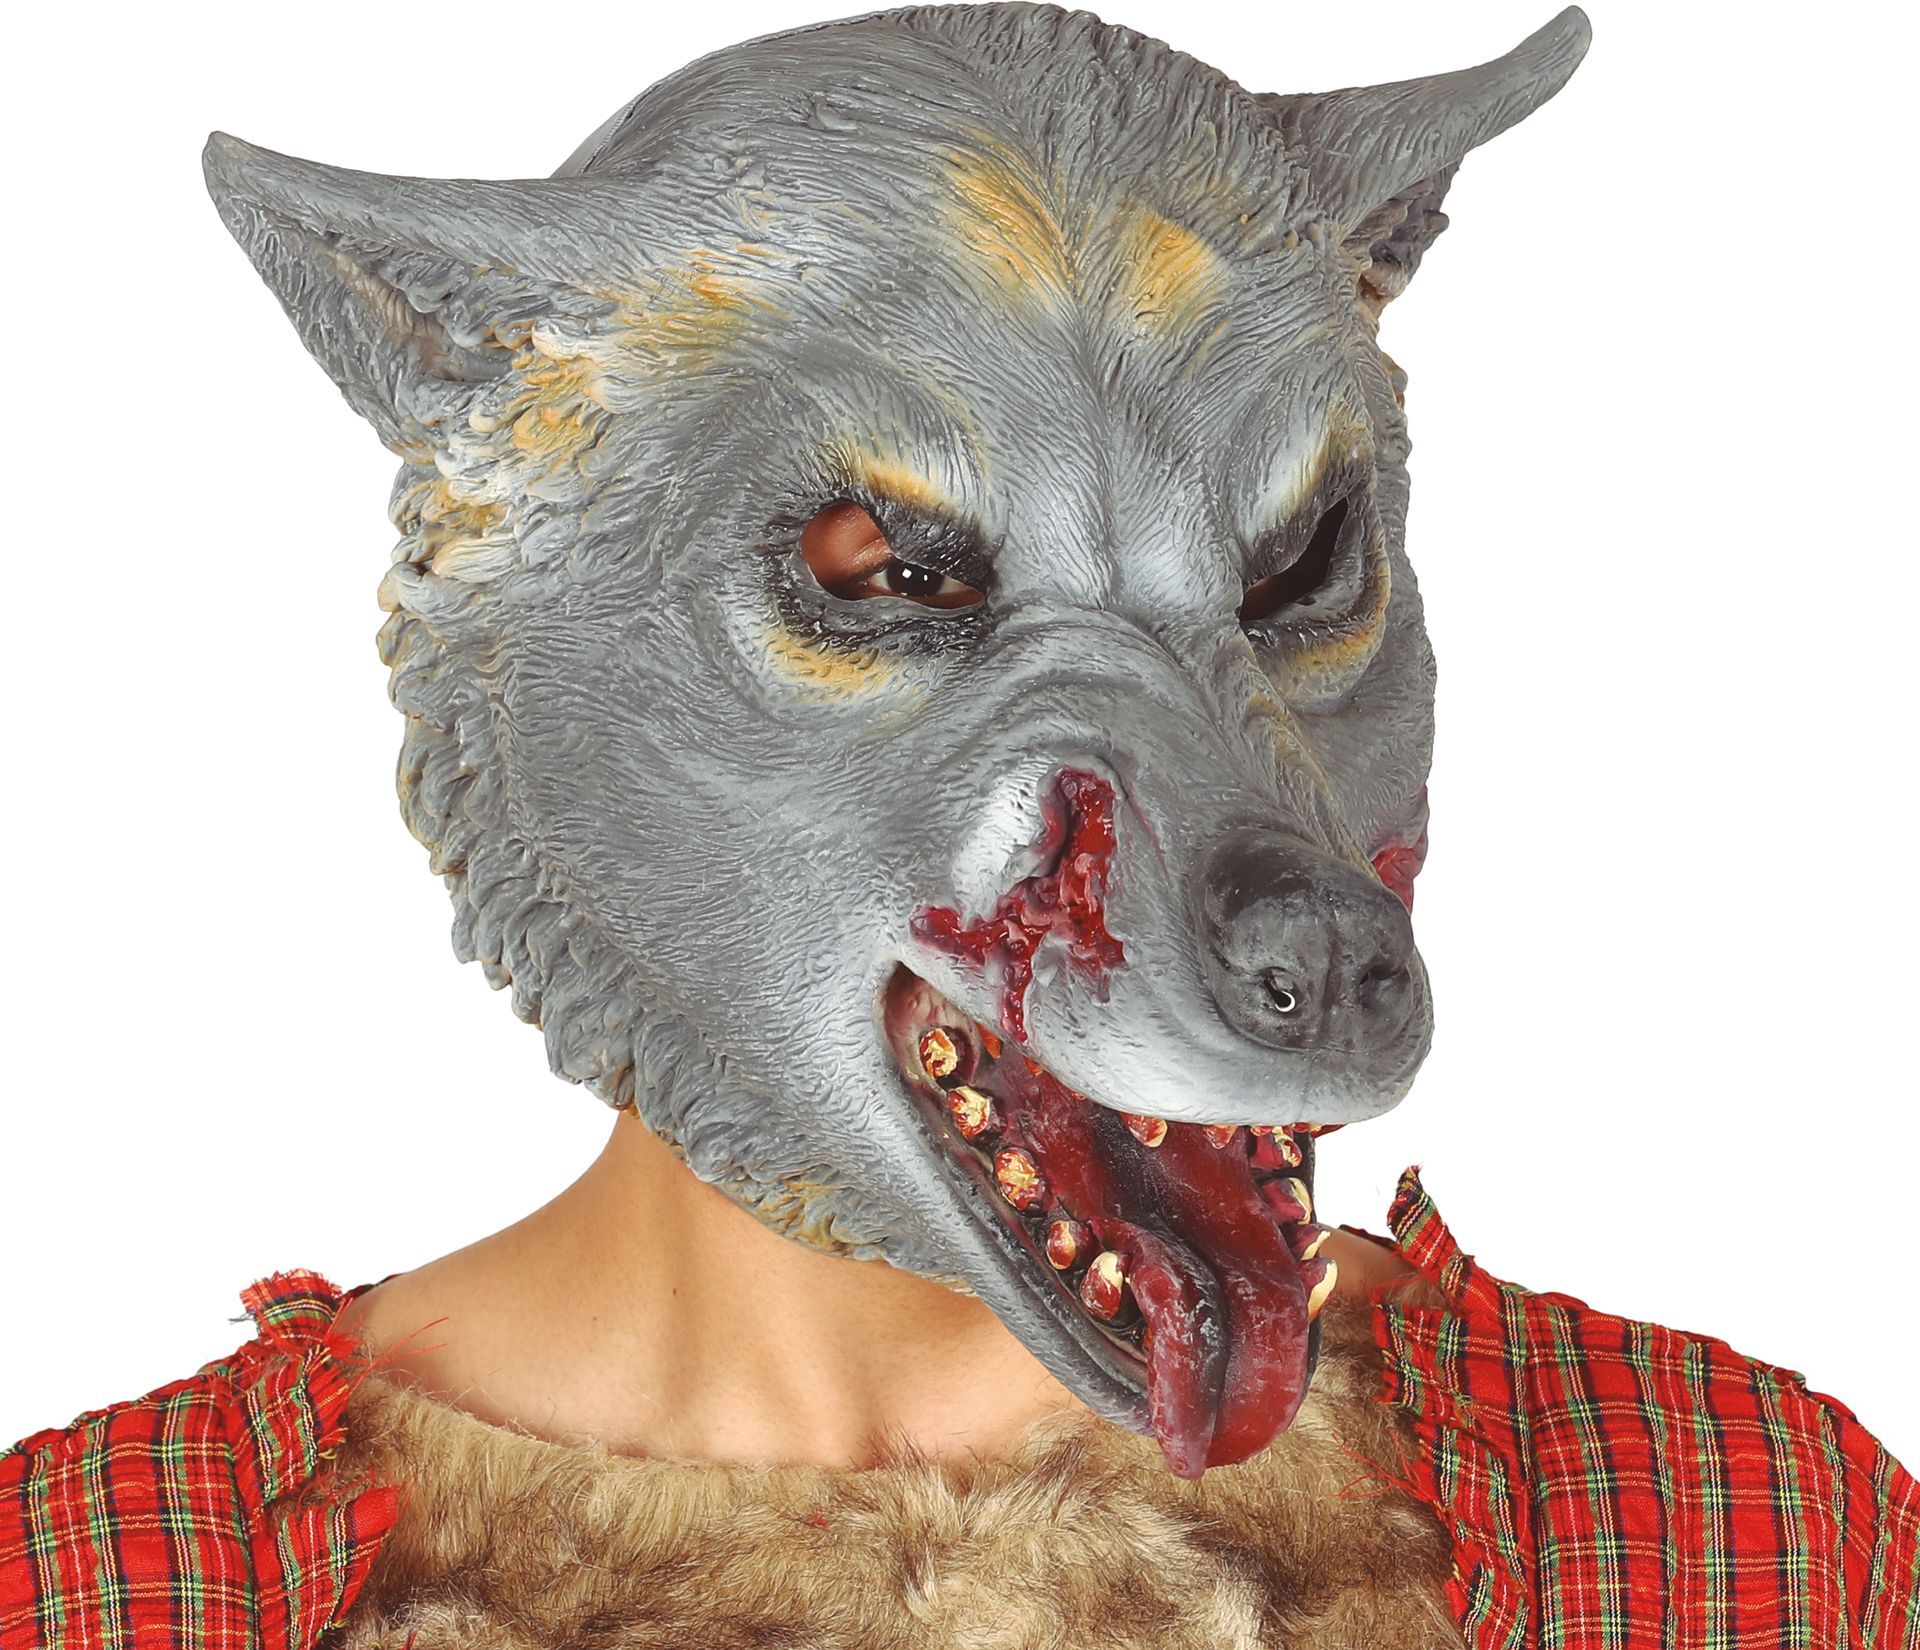 Weerwolf latex masker